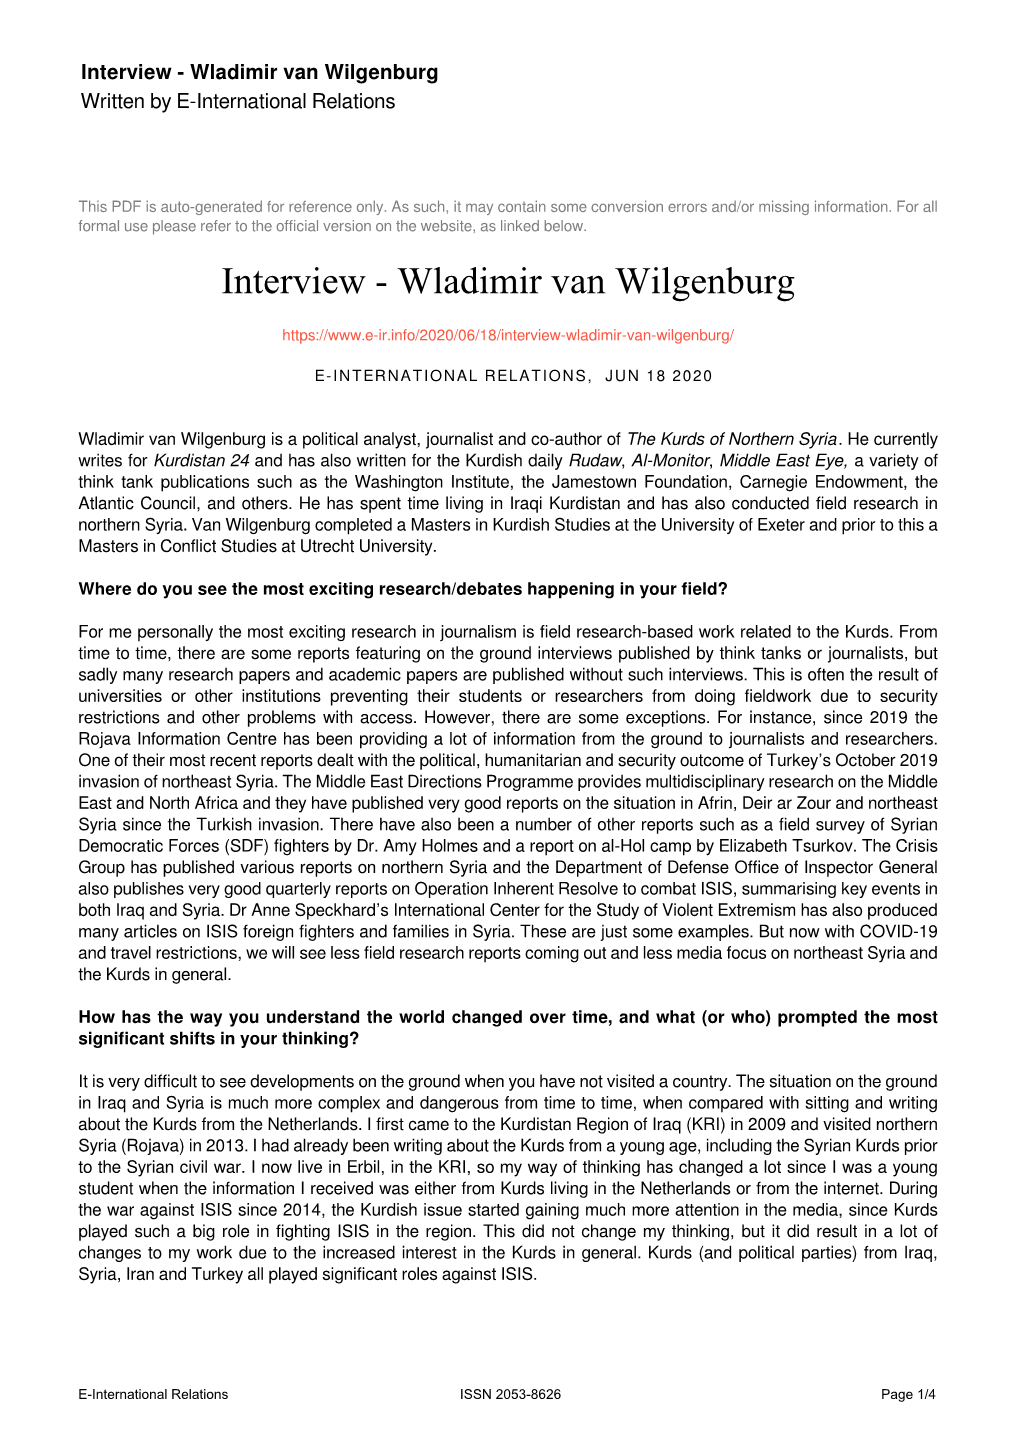 Wladimir Van Wilgenburg Written by E-International Relations